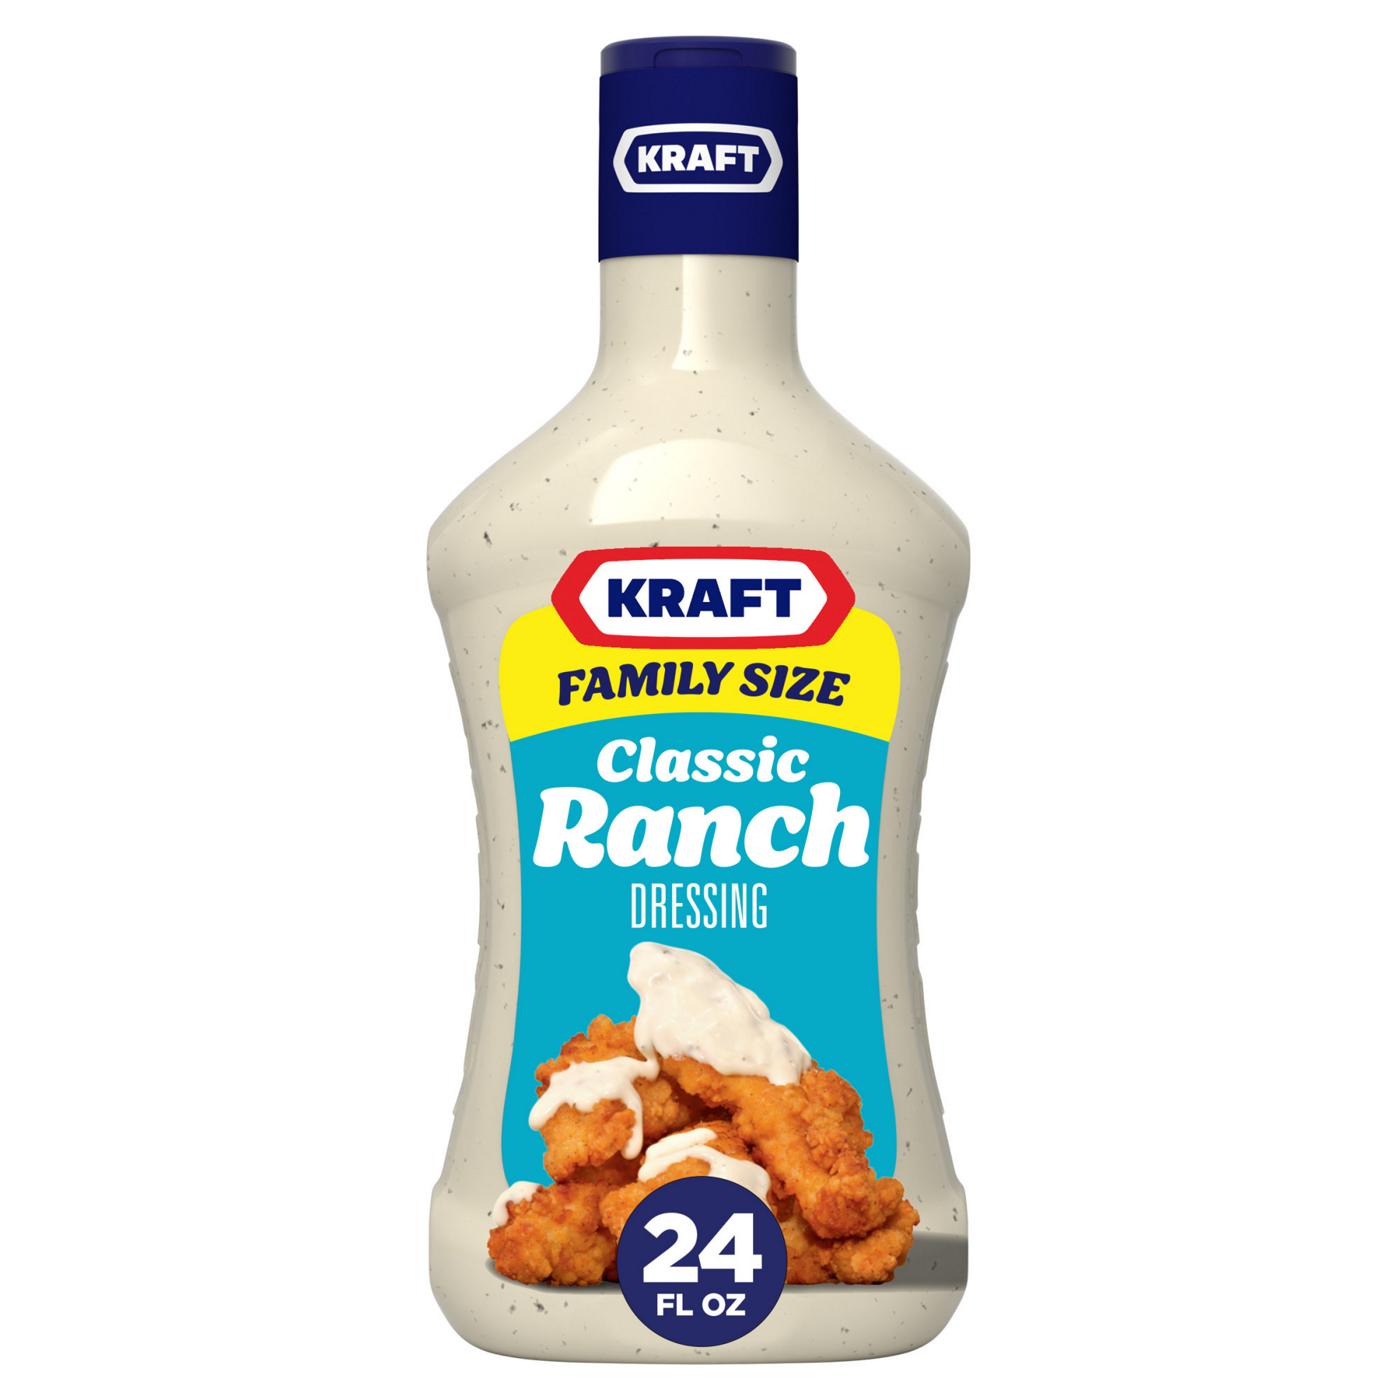 Kraft Classic Ranch Dressing; image 1 of 4